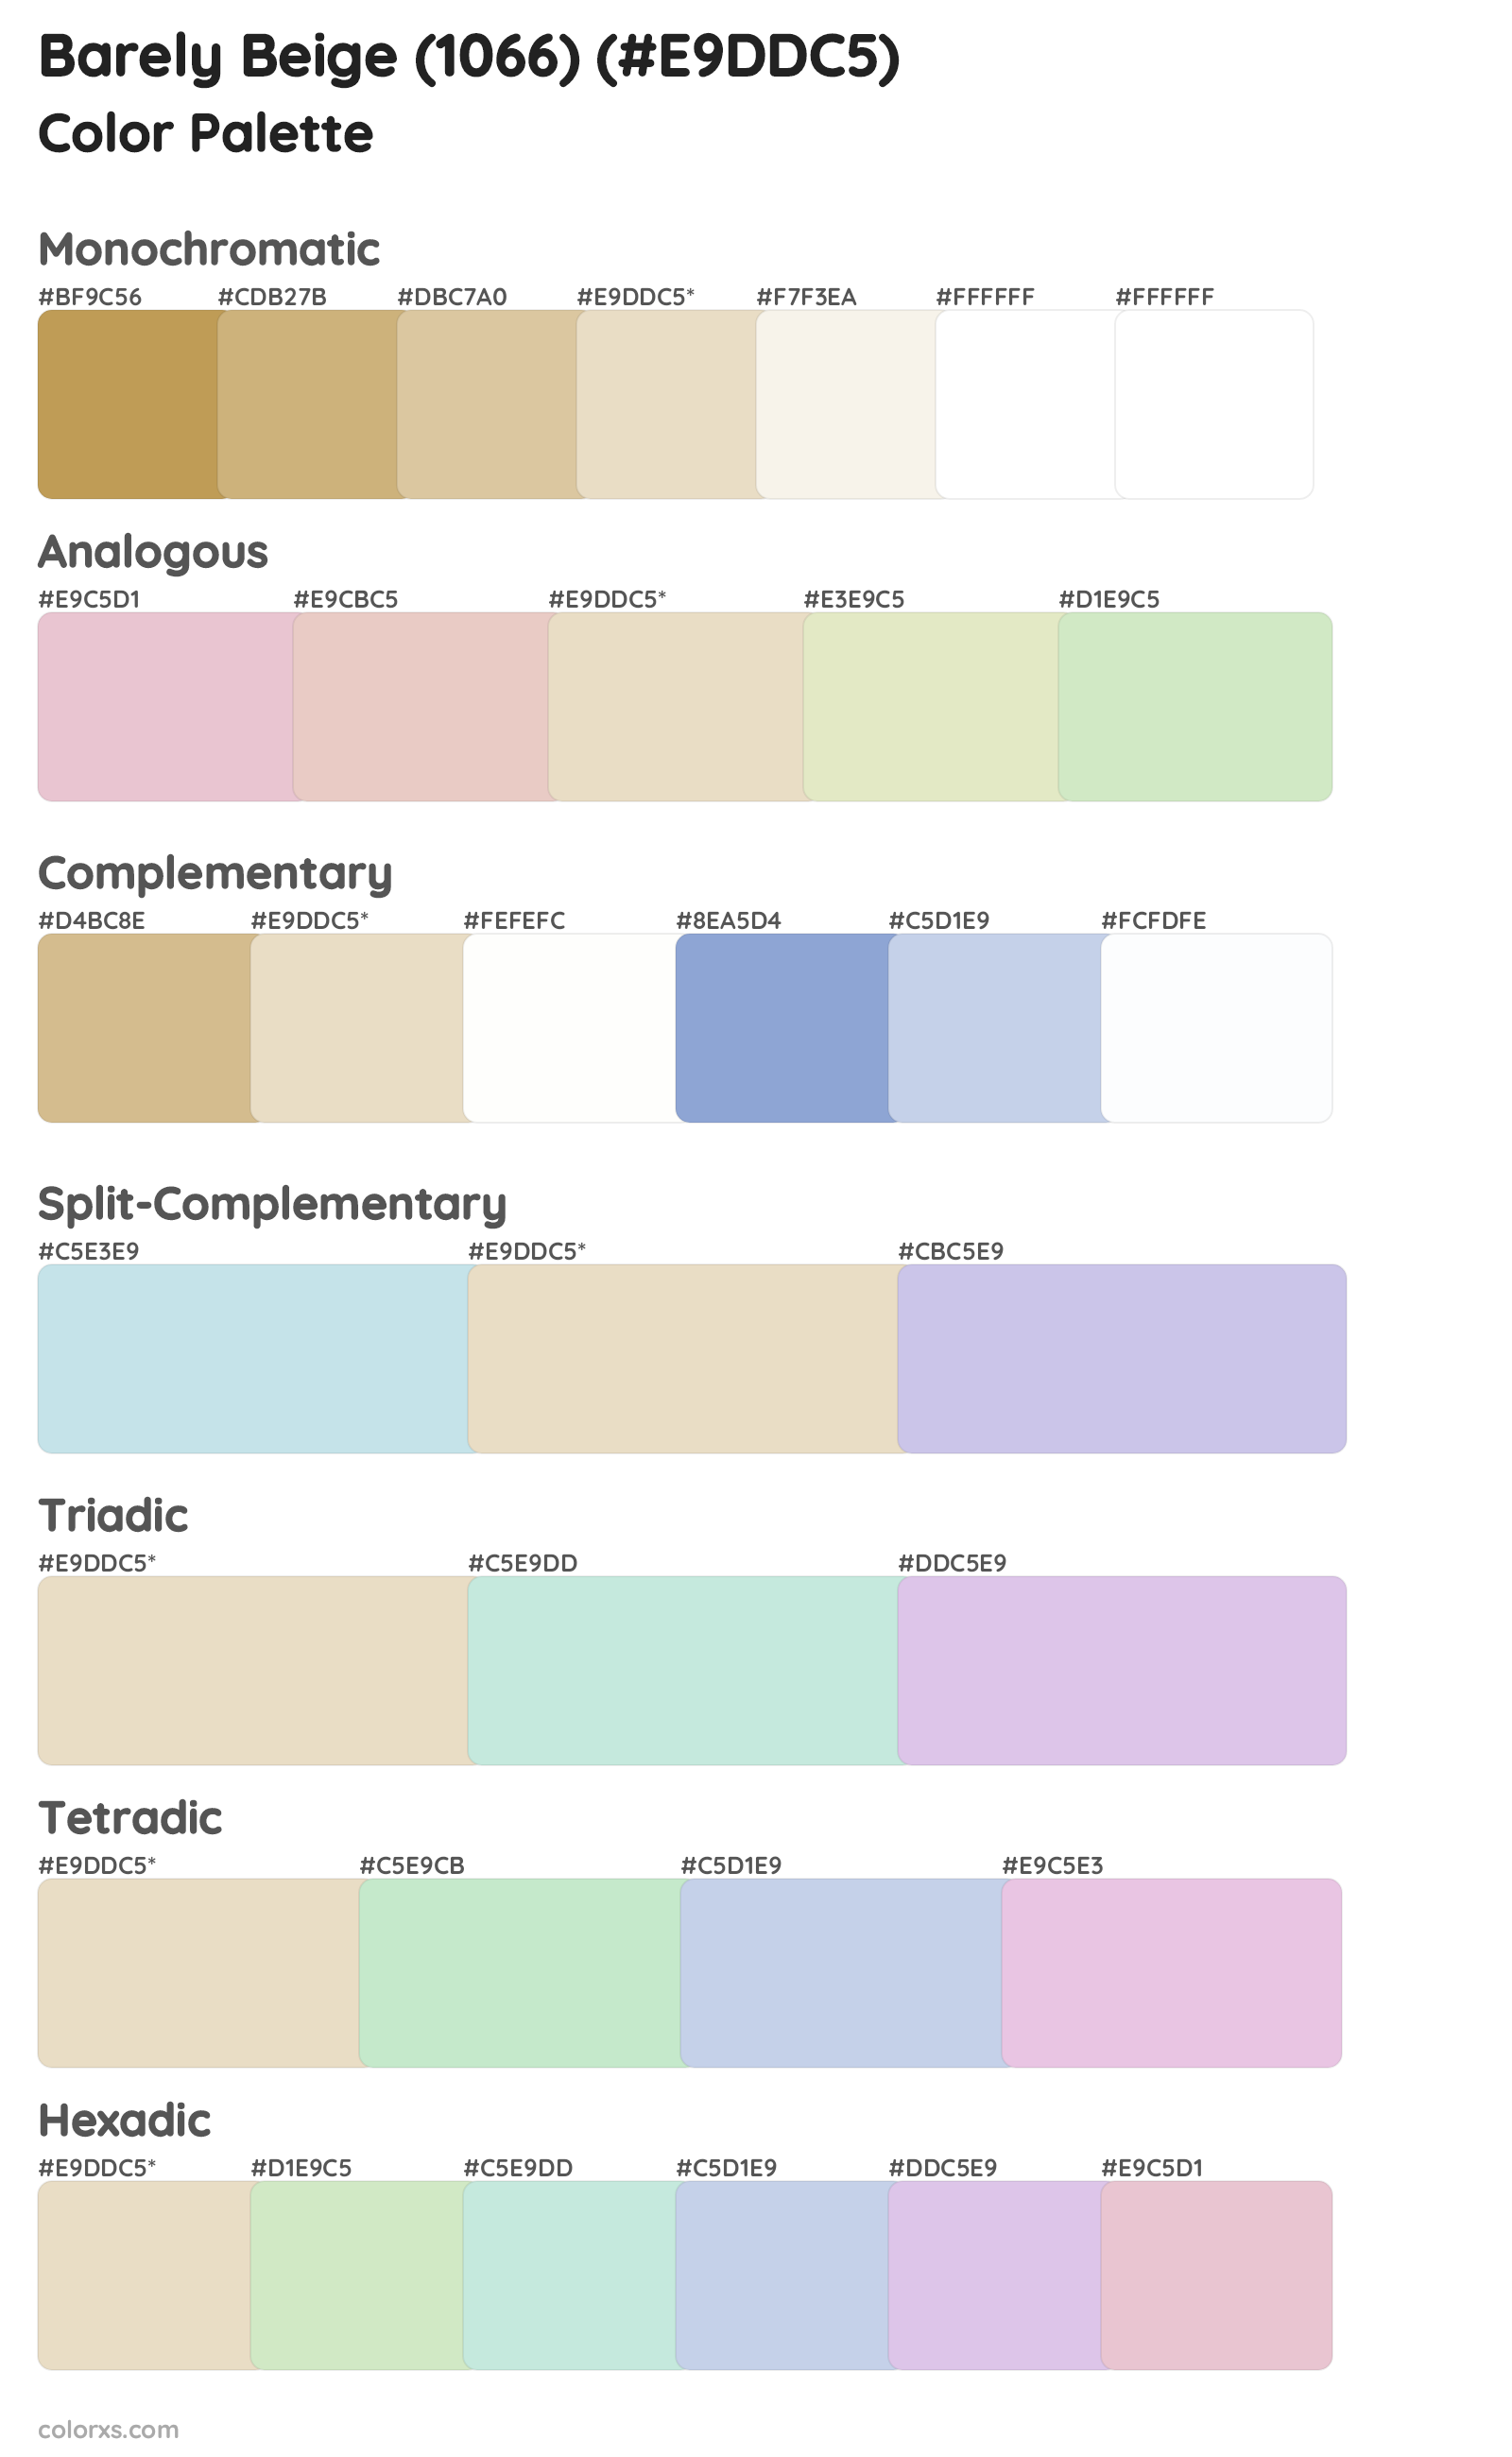 Barely Beige (1066) Color Scheme Palettes